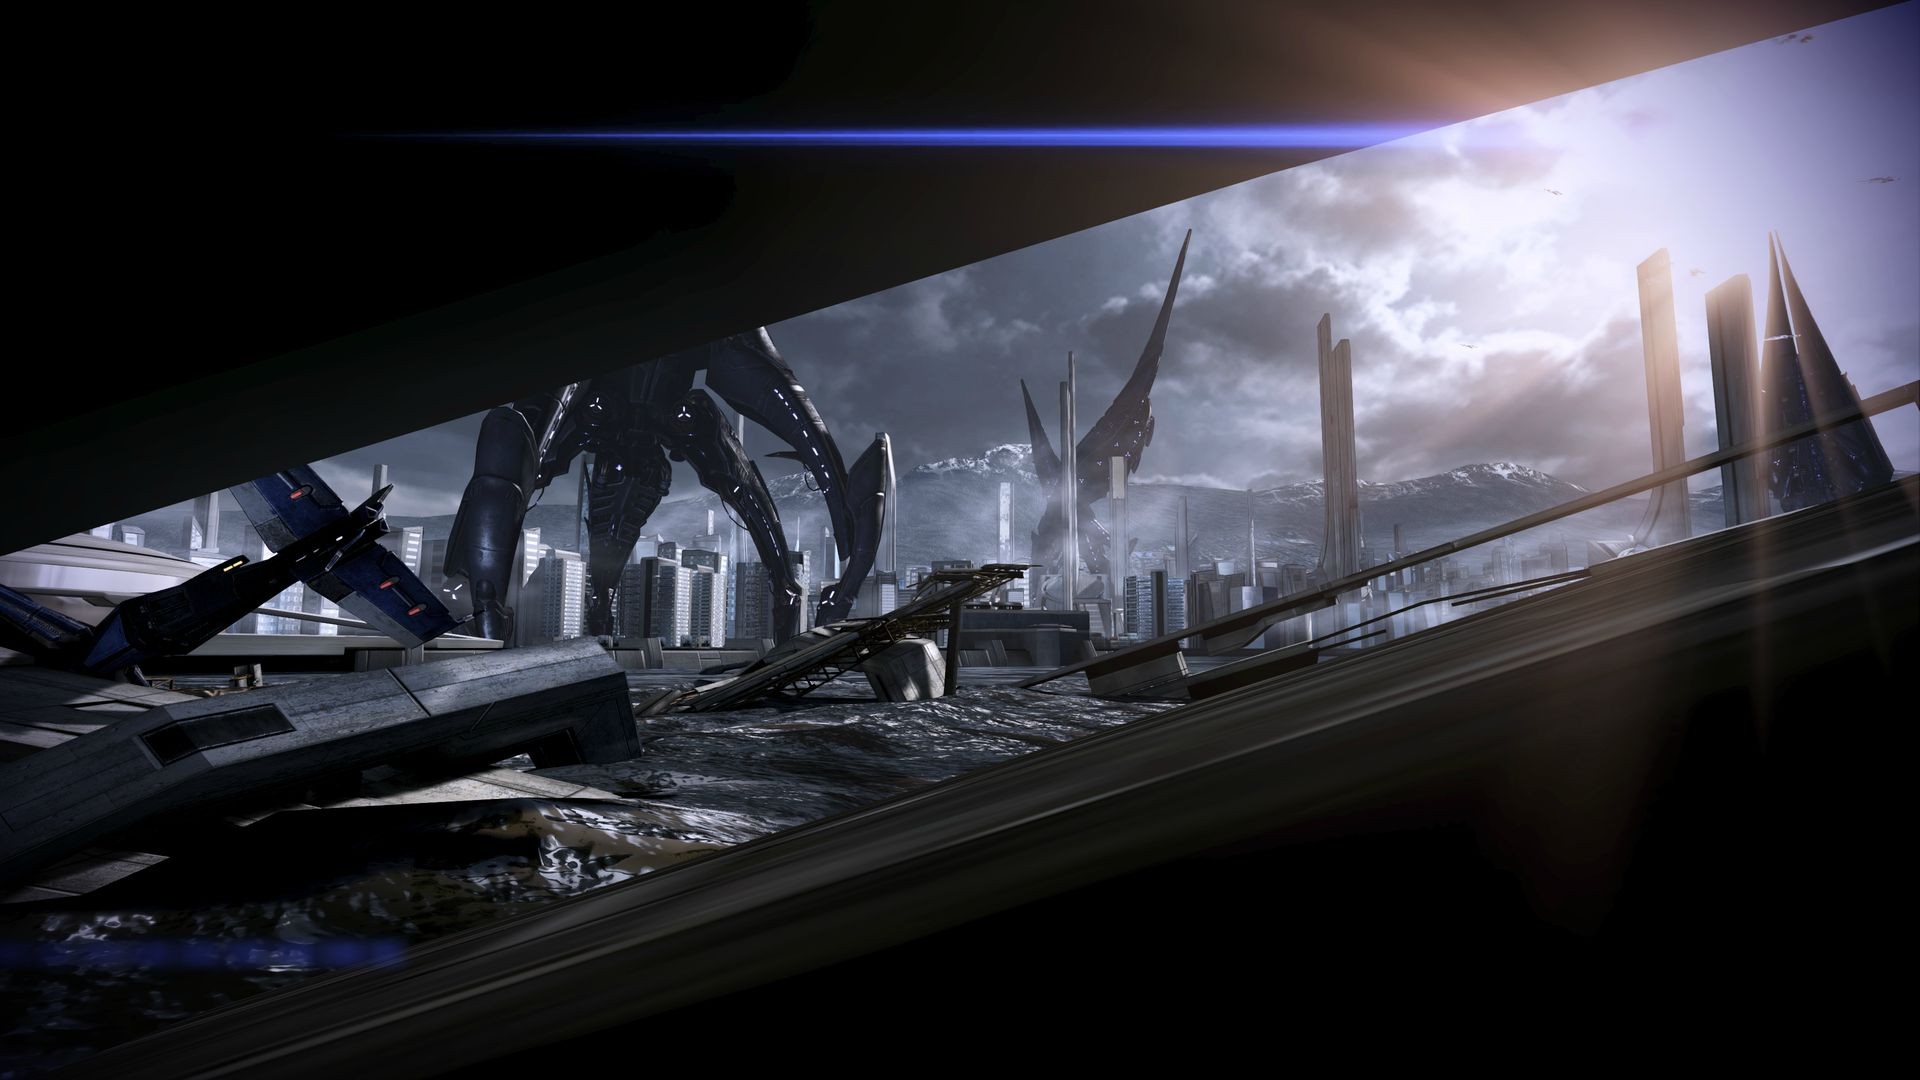 Mass Effect 3 Hd Wallpaper Background Image 1920x1080